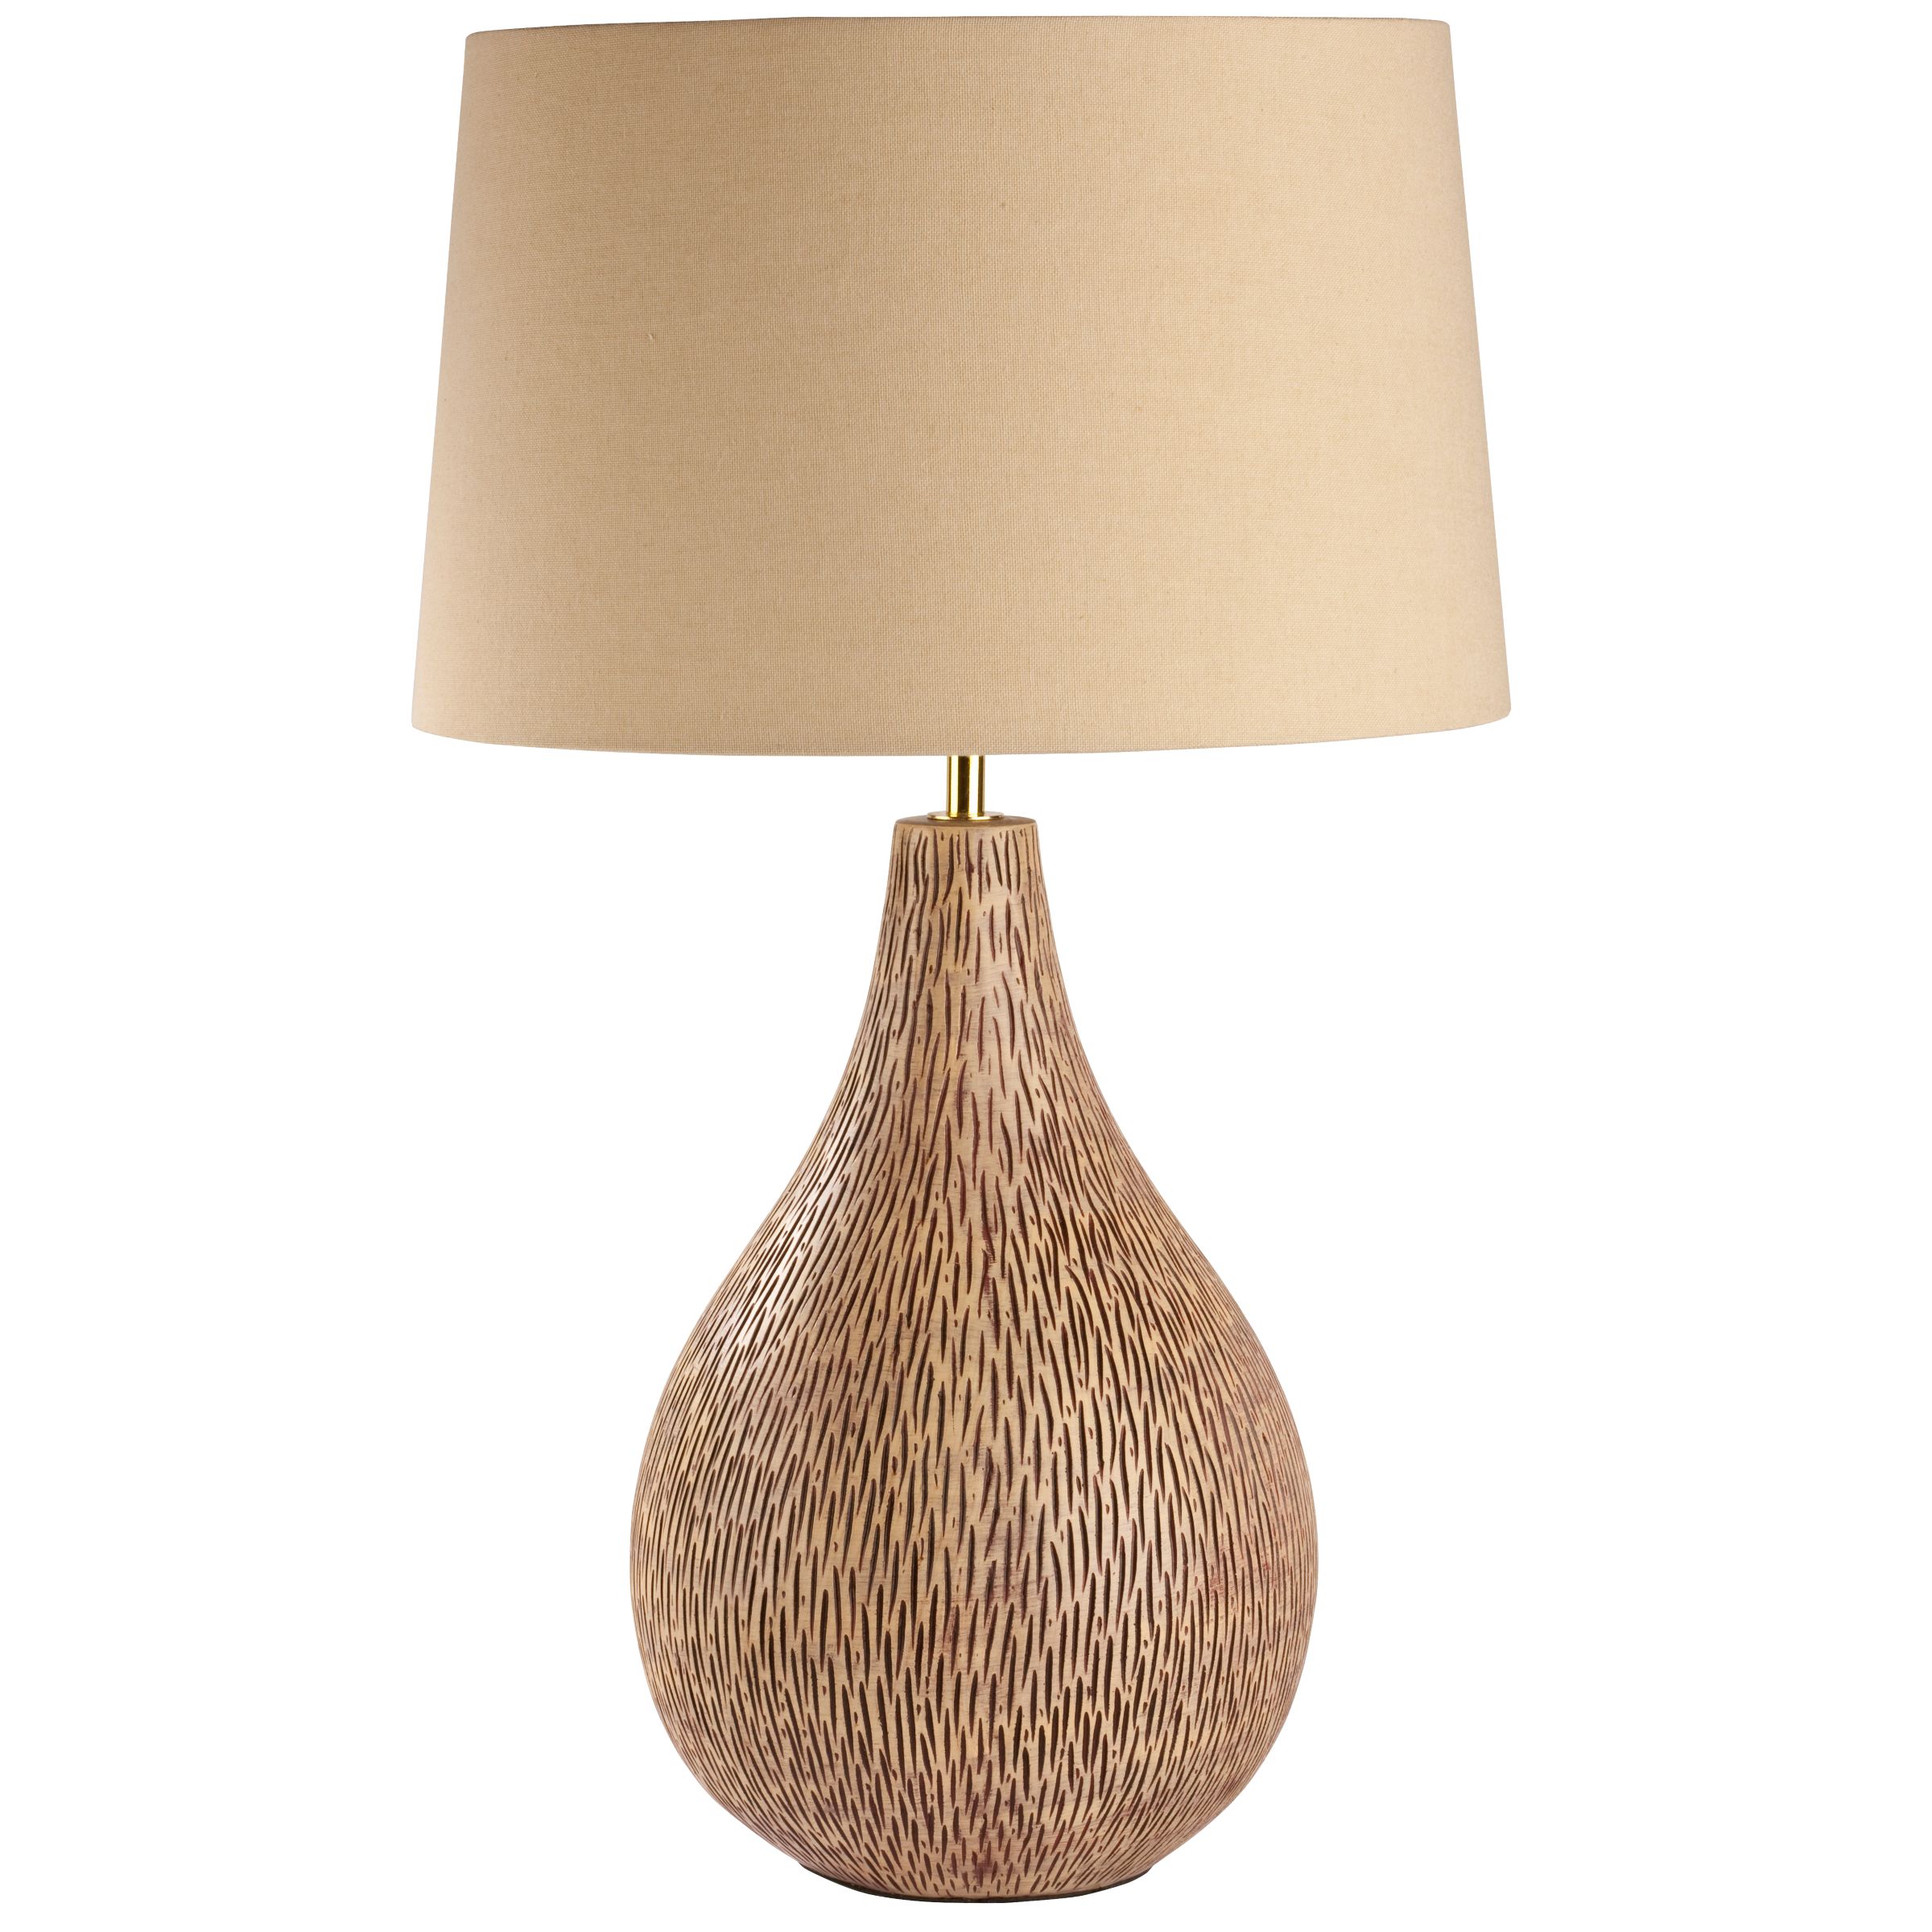 Orianna Table Lamp